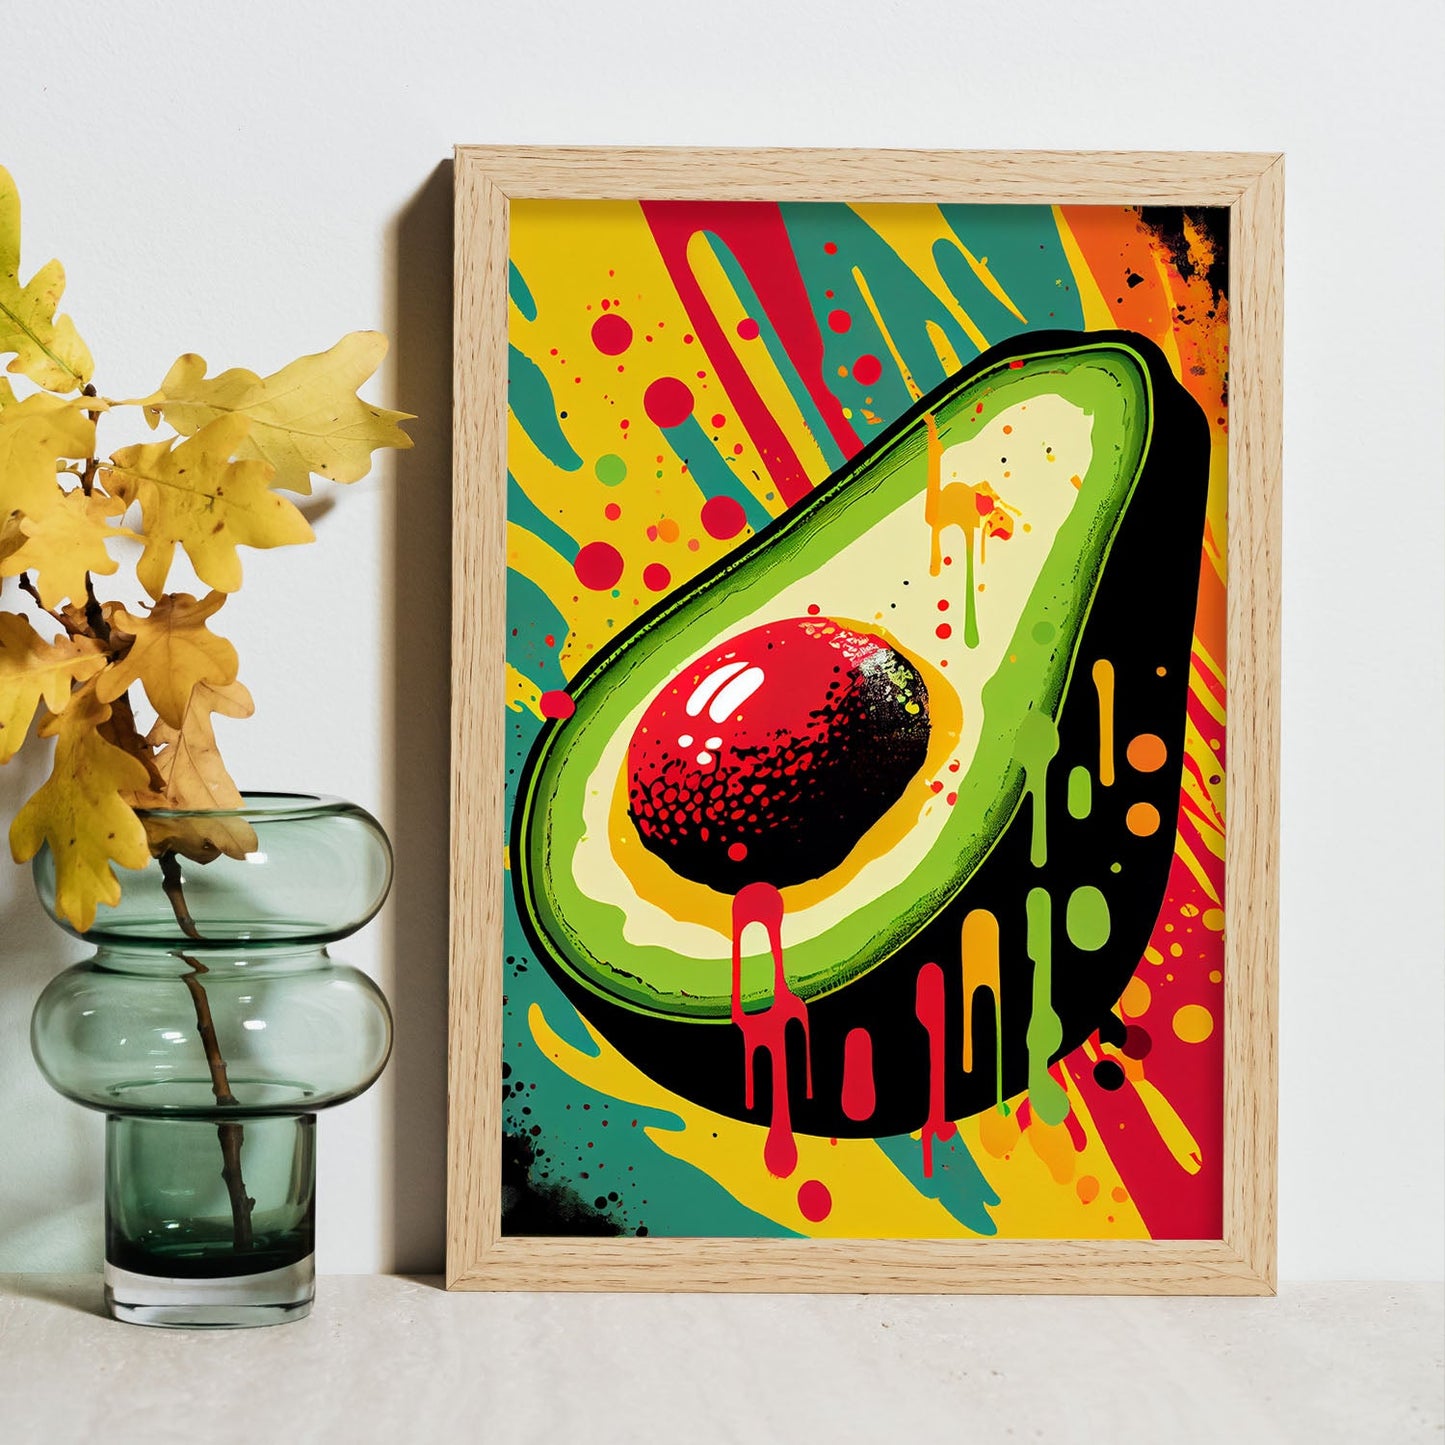 Nacnic Avocado Pop Art_3. Aesthetic Wall Art Prints for Bedroom or Living Room Design.